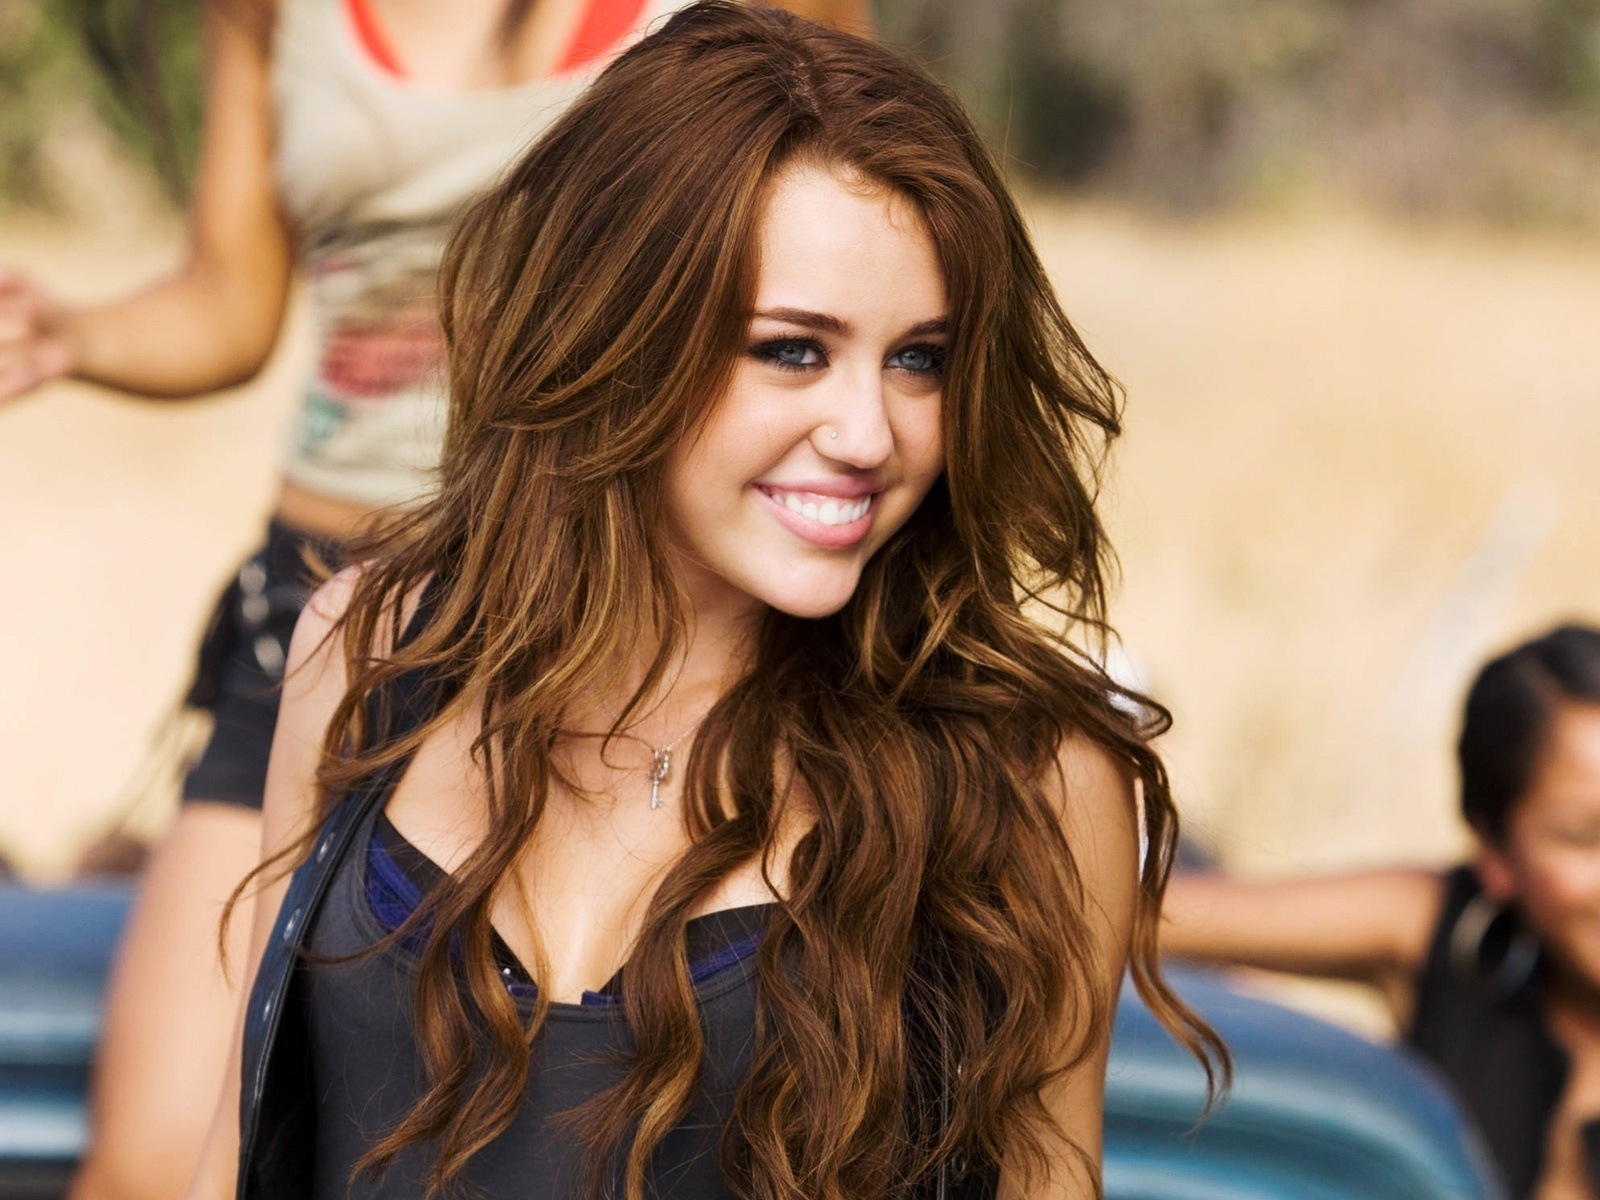 http://2.bp.blogspot.com/-JIARX2hlEI8/Tgw739JovhI/AAAAAAAAAGU/MMeDJ5qKt-o/s1600/Miley+Cyrus+2011+3.jpg